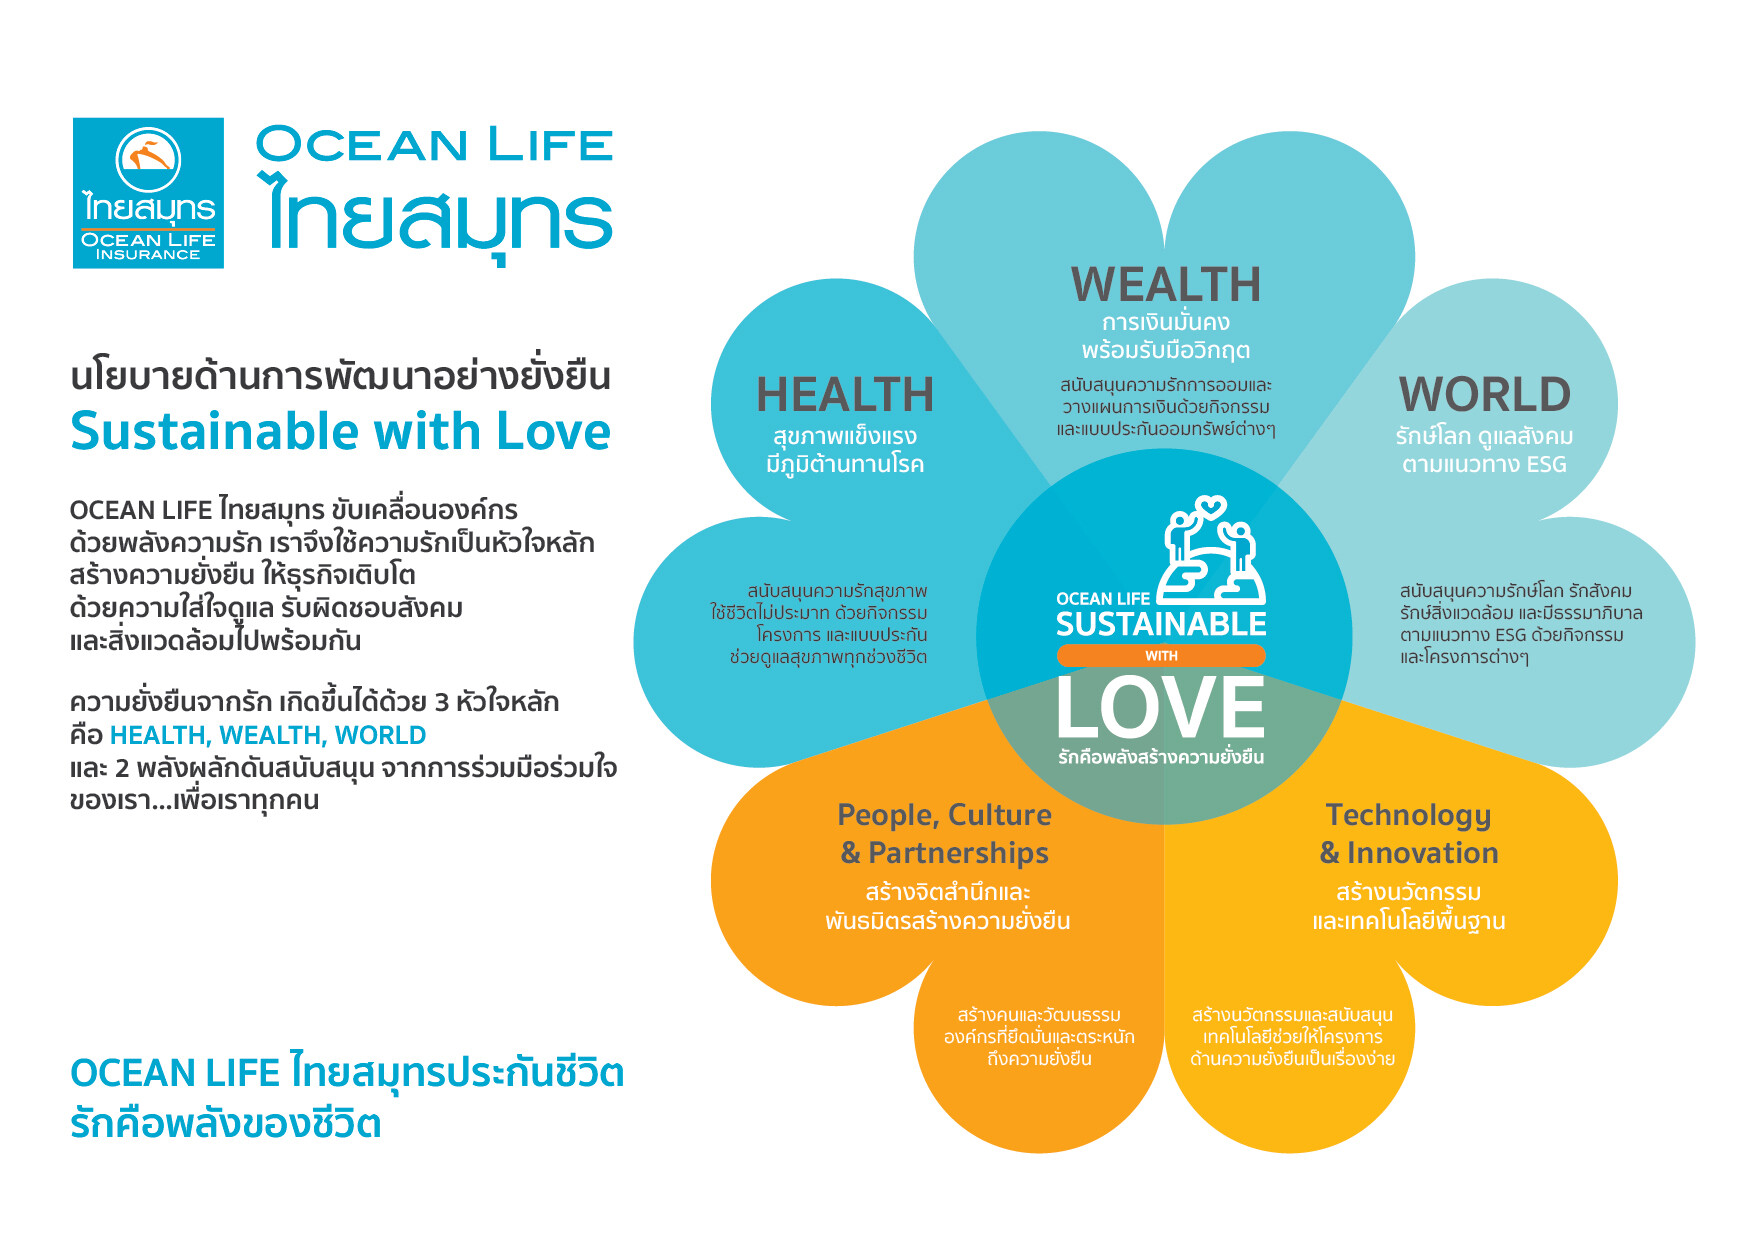 OCEAN LIFE ไทยสมุทร เผยผลการดำเนินงานปี 64 ทำกำไรกว่า 945 ล้านบาท พร้อมเดินหน้าใช้พลังความรักสร้างความยั่งยืนให้ธุรกิจและทุกคน ด้วยแนวคิด "Sustainable with Love"